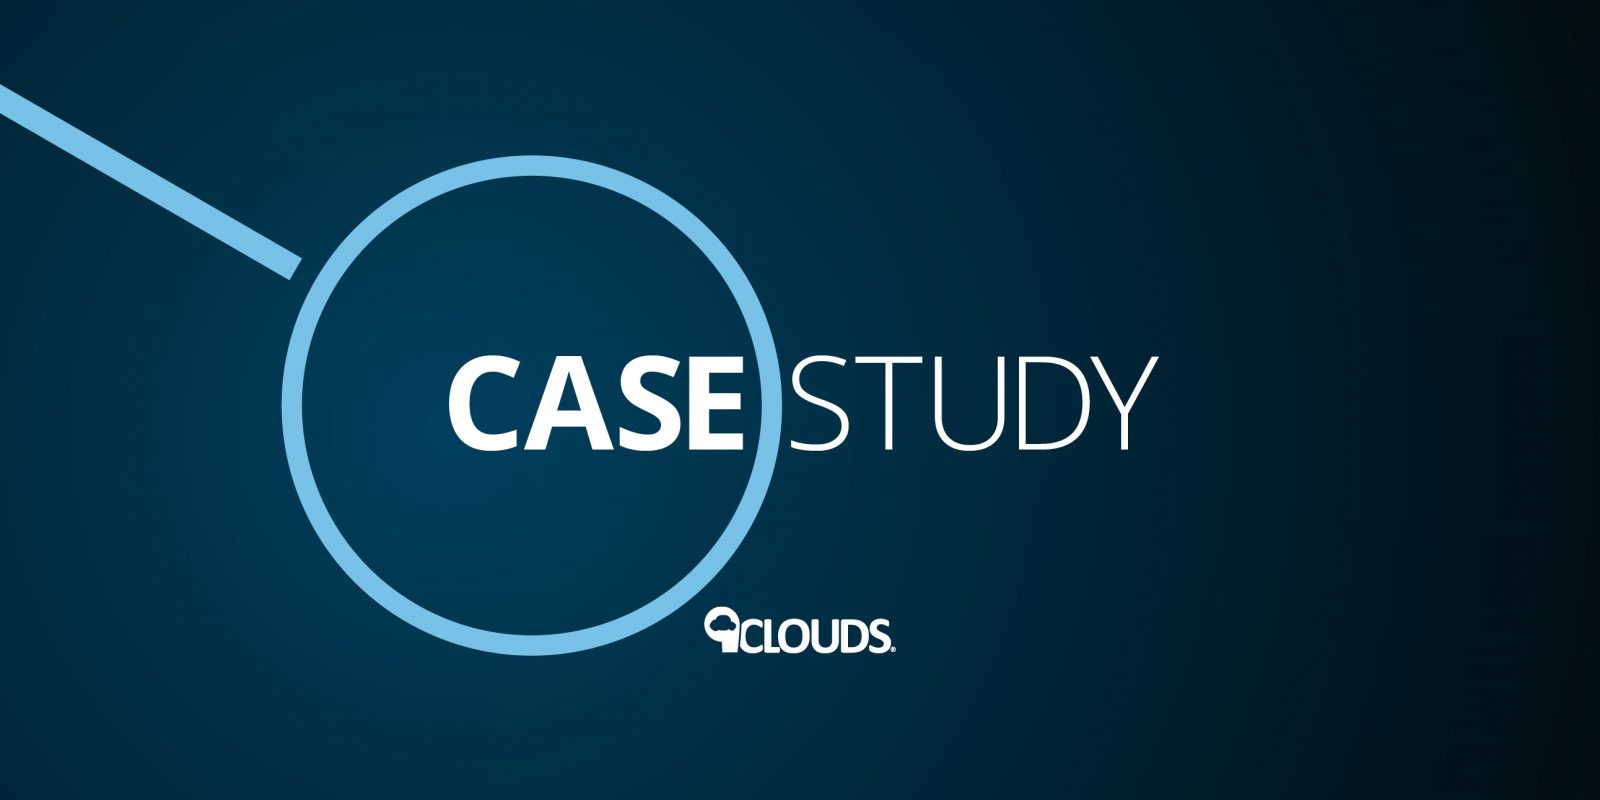 [Case Study] A Powerful Partnership: 9 Clouds Helps Gateway Fargo Improve Auto Marketing